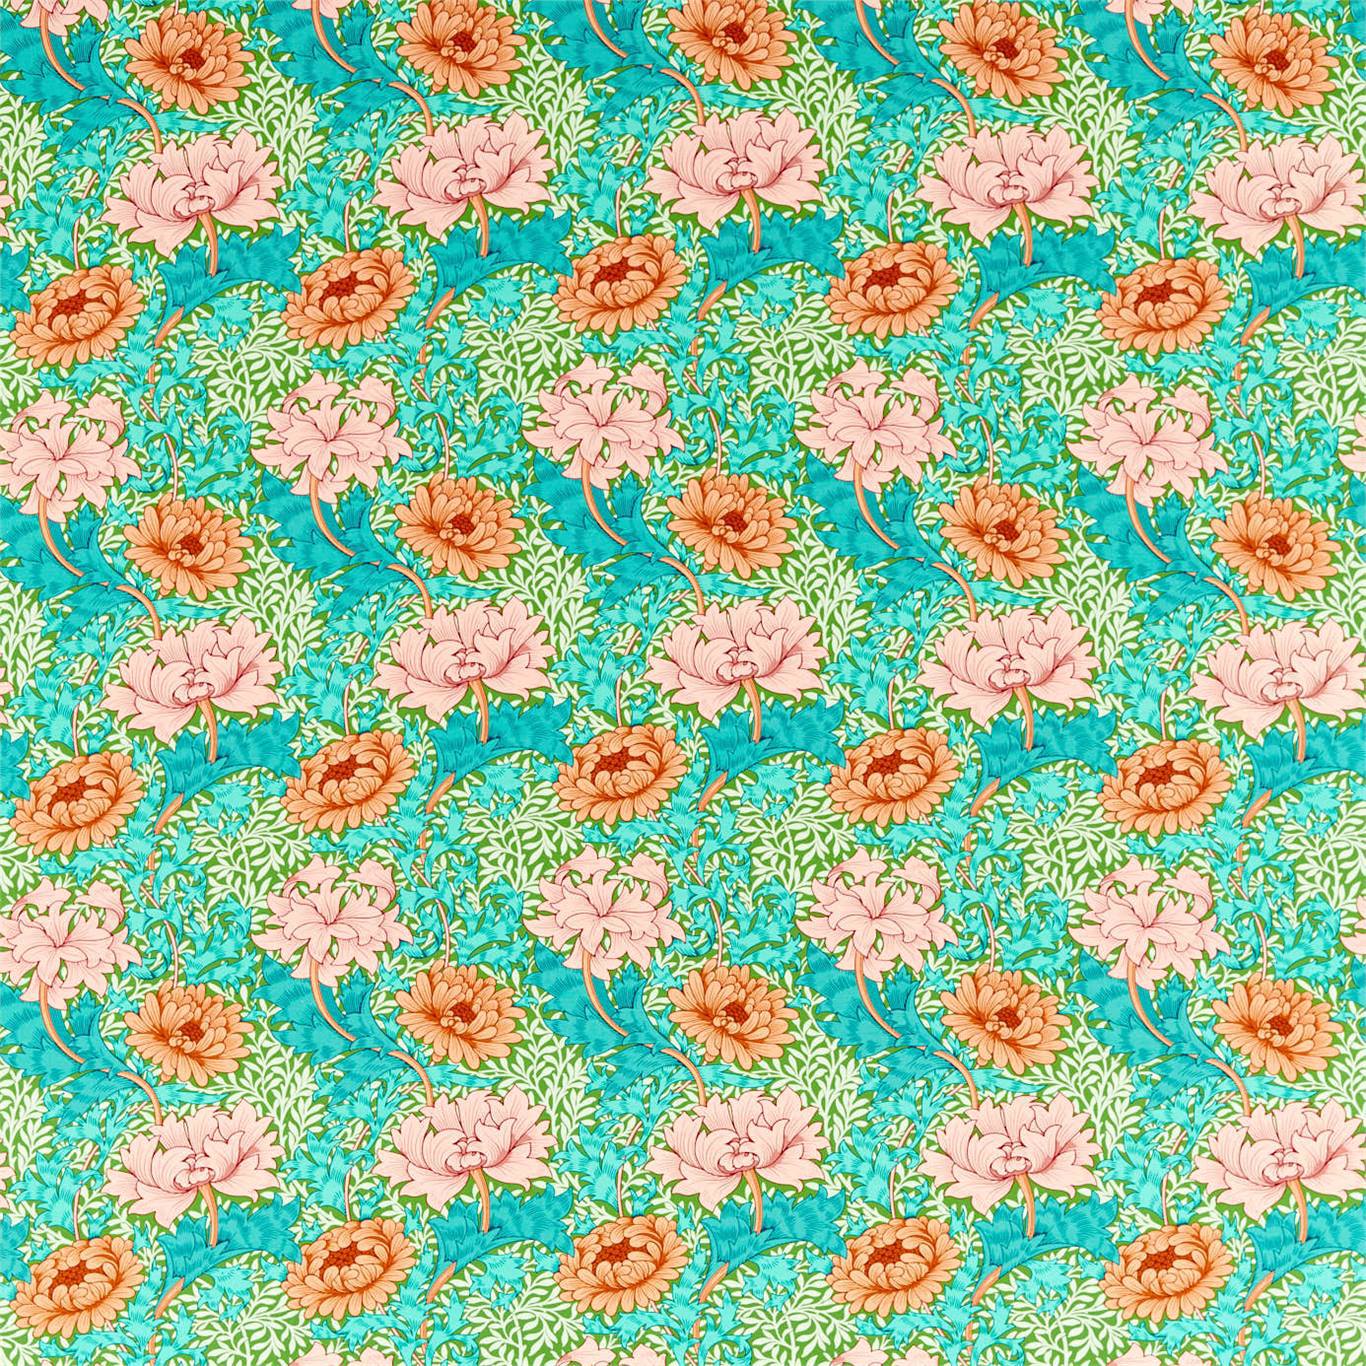 Chrysanthemum Fabric by Morris & Co.